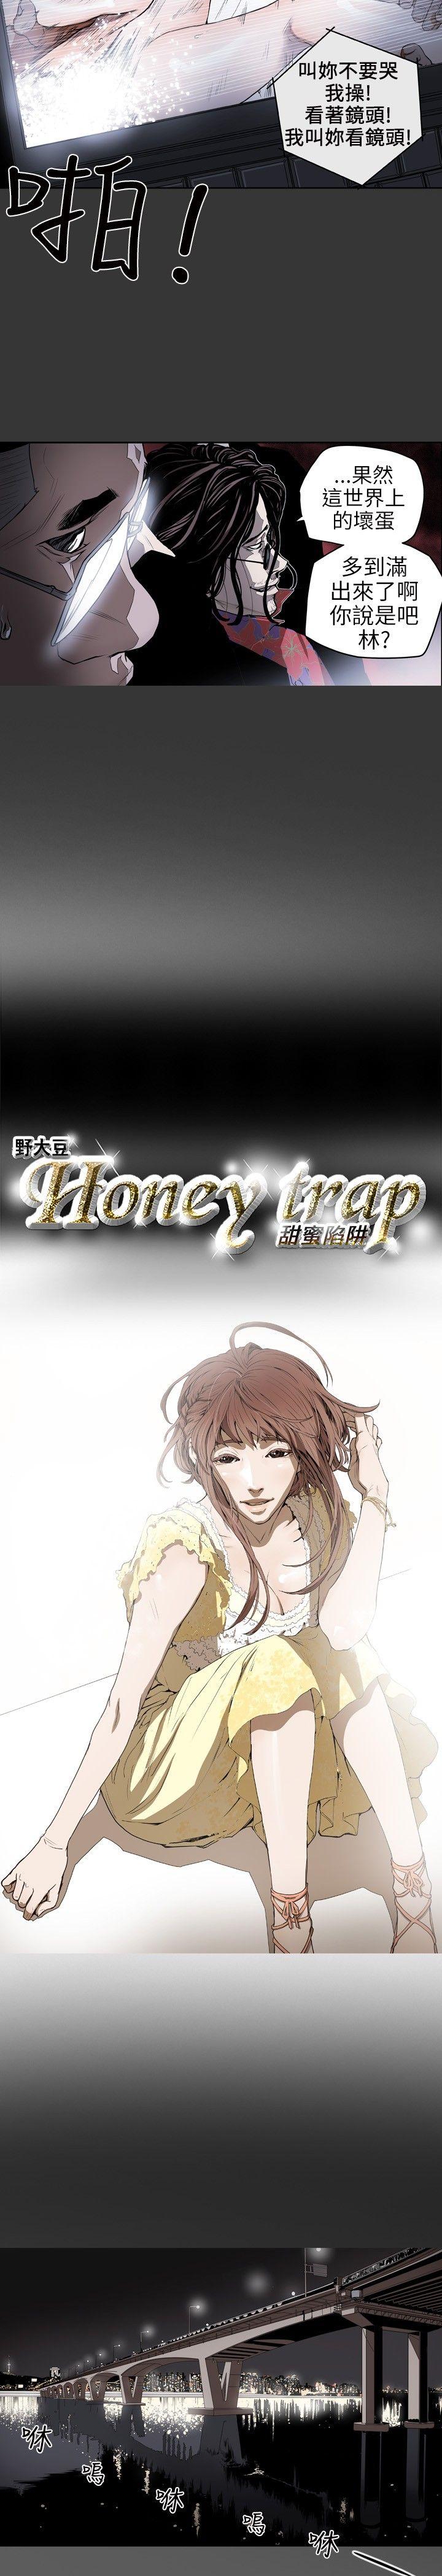 Honey trap 甜蜜陷阱  第5话 漫画图片2.jpg